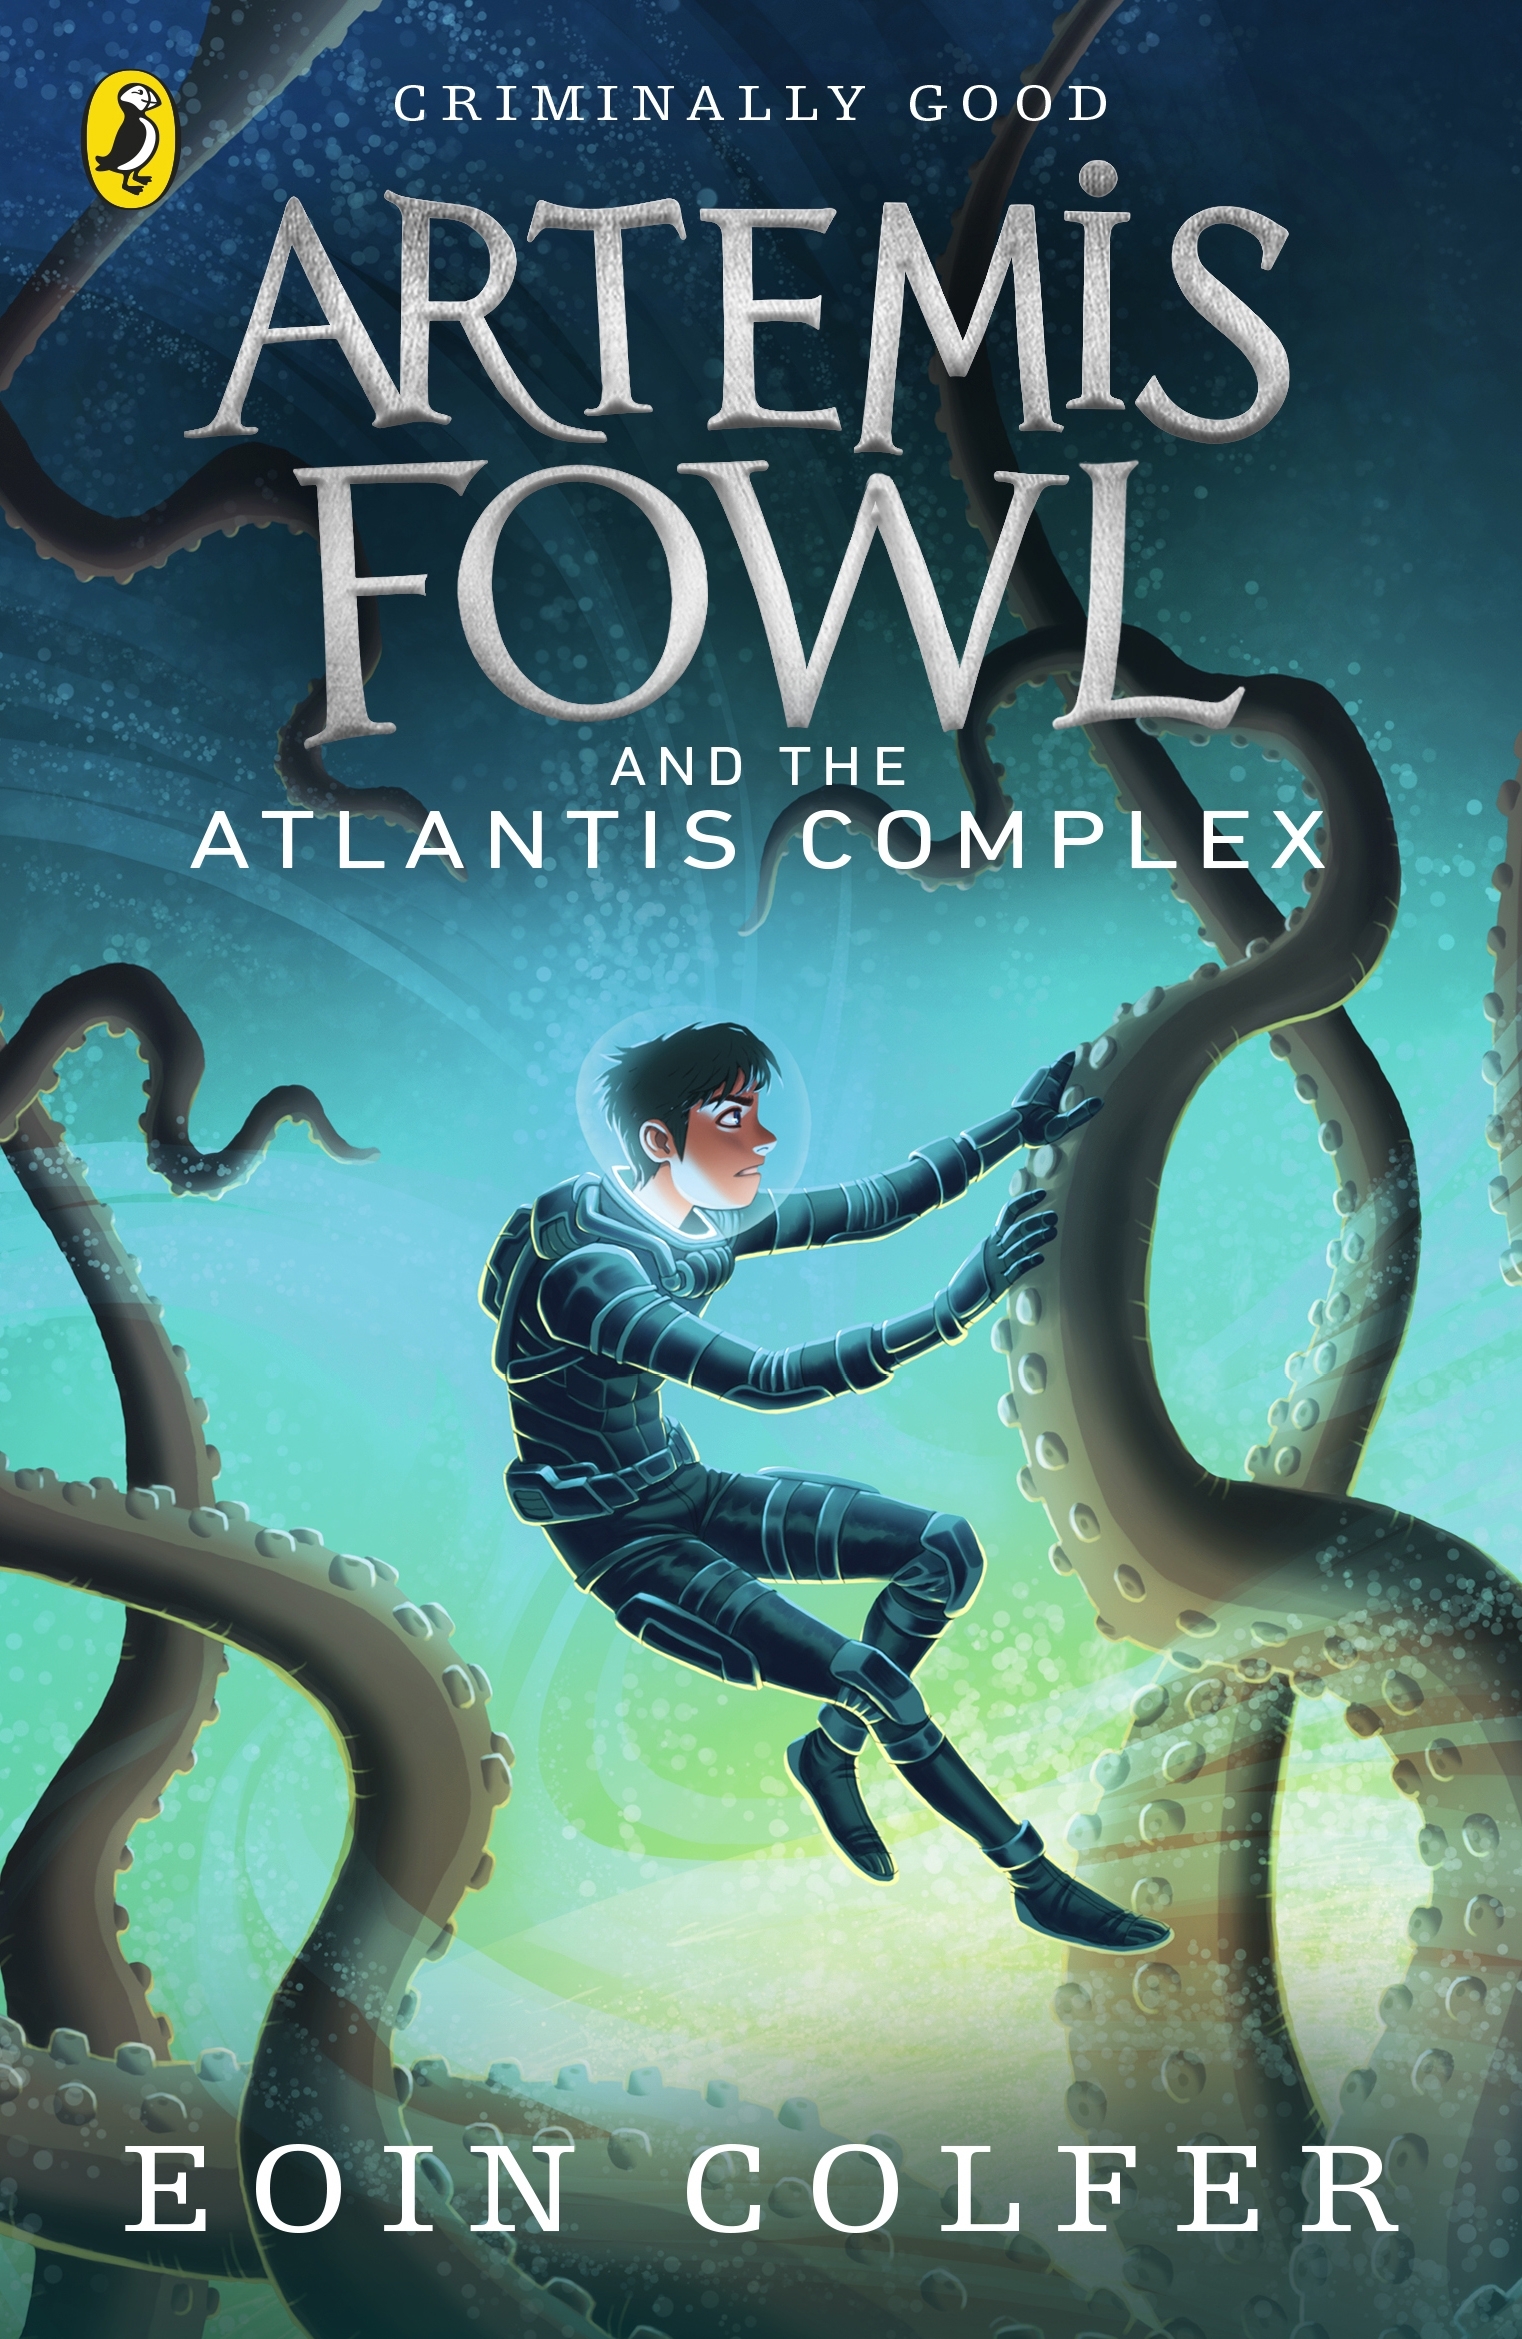 Resenha: Artemis Fowl – Graphic Novel HQ